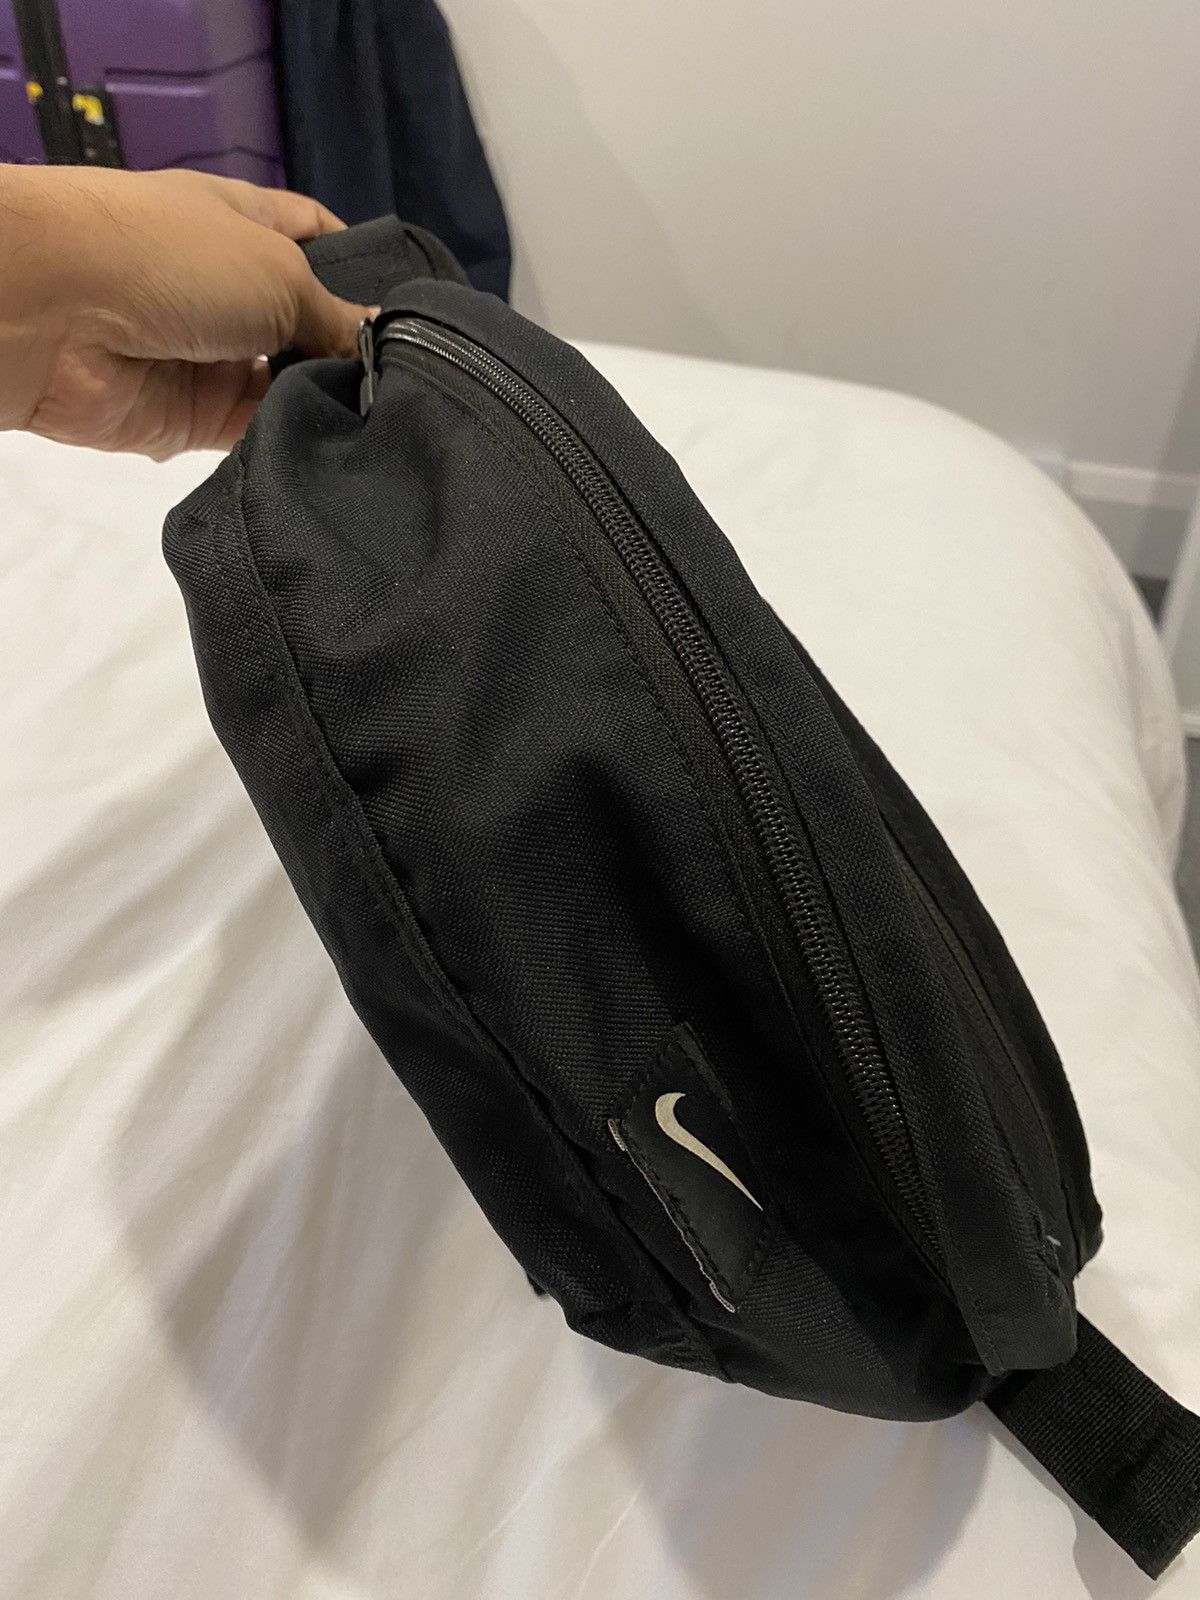 Authentic Nike Waist Pouch Bag - 11